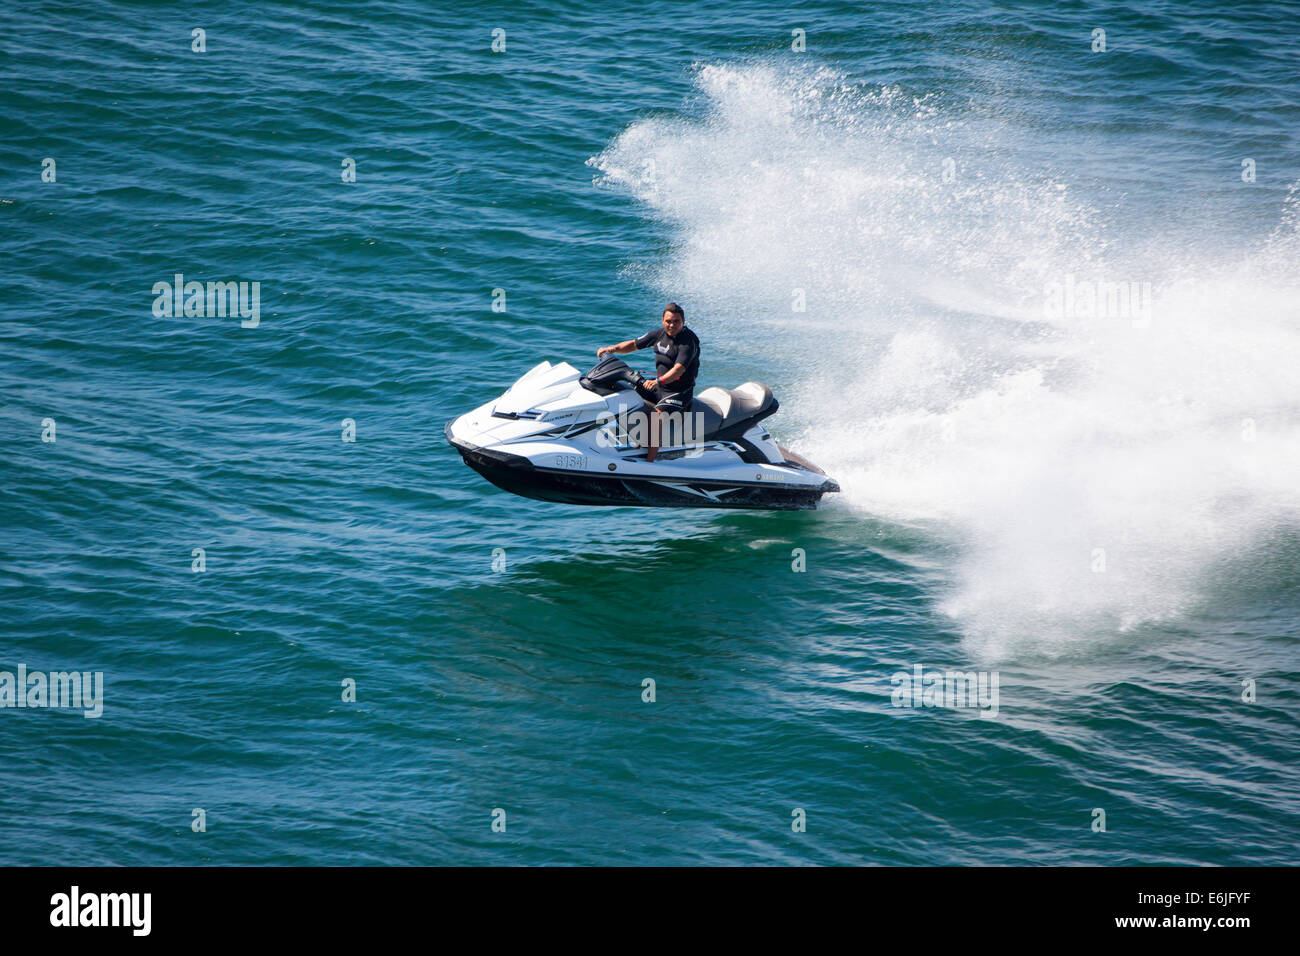 Jet Ski personal watercraft manufactured by Kawasaki in the Mediterranean sea Stock Photo